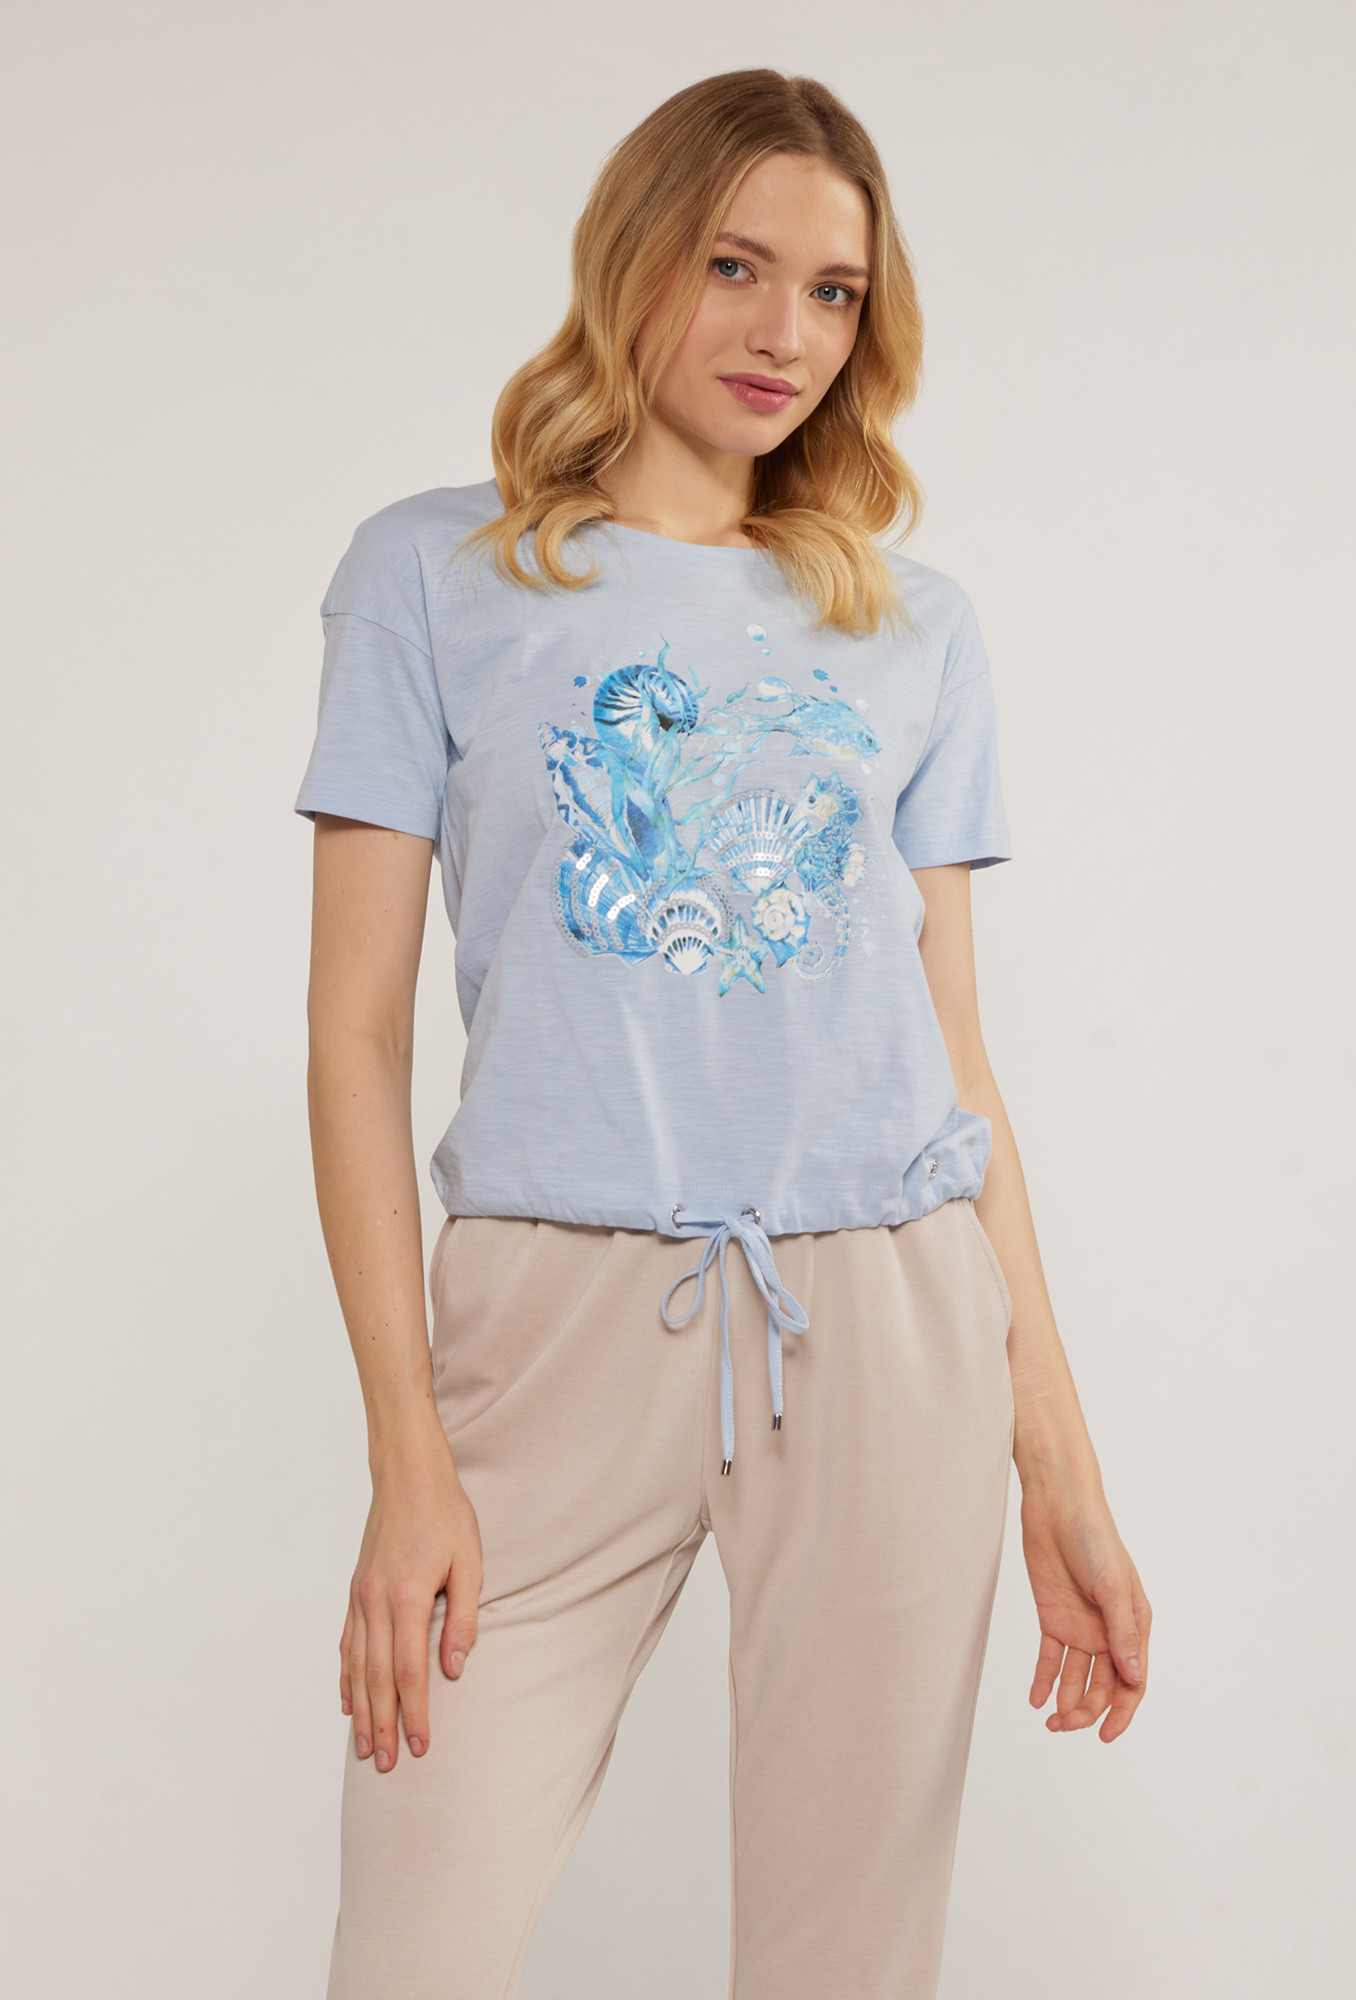 Monnari Blouses Women's T-Shirt With A Pattern XL